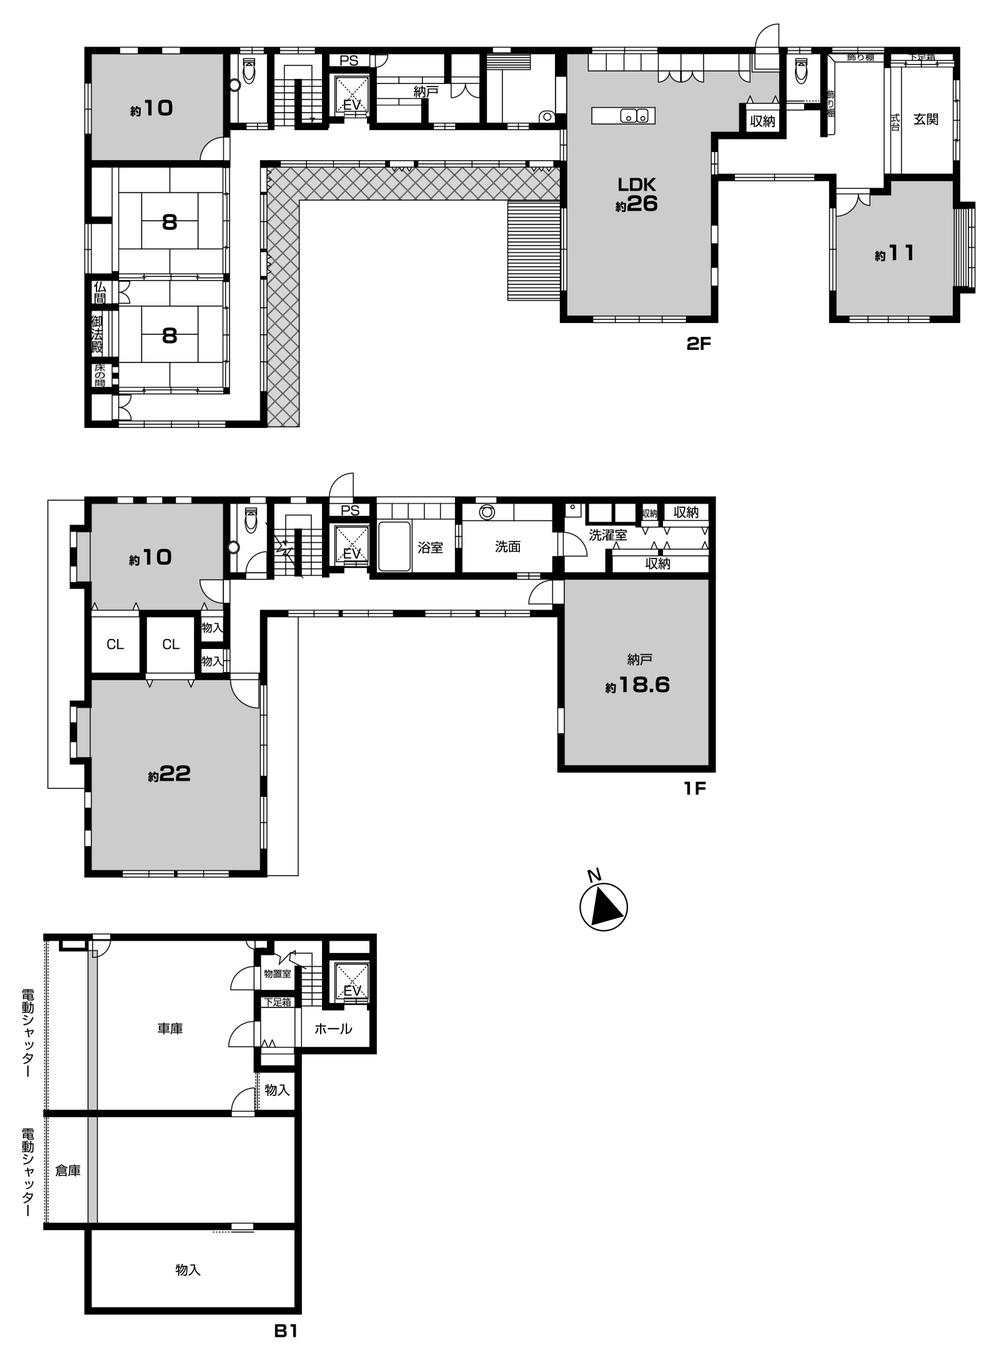 Floor plan. 130 million yen, 6LDK + S (storeroom), Land area 519.45 sq m , Building area 492.44 sq m